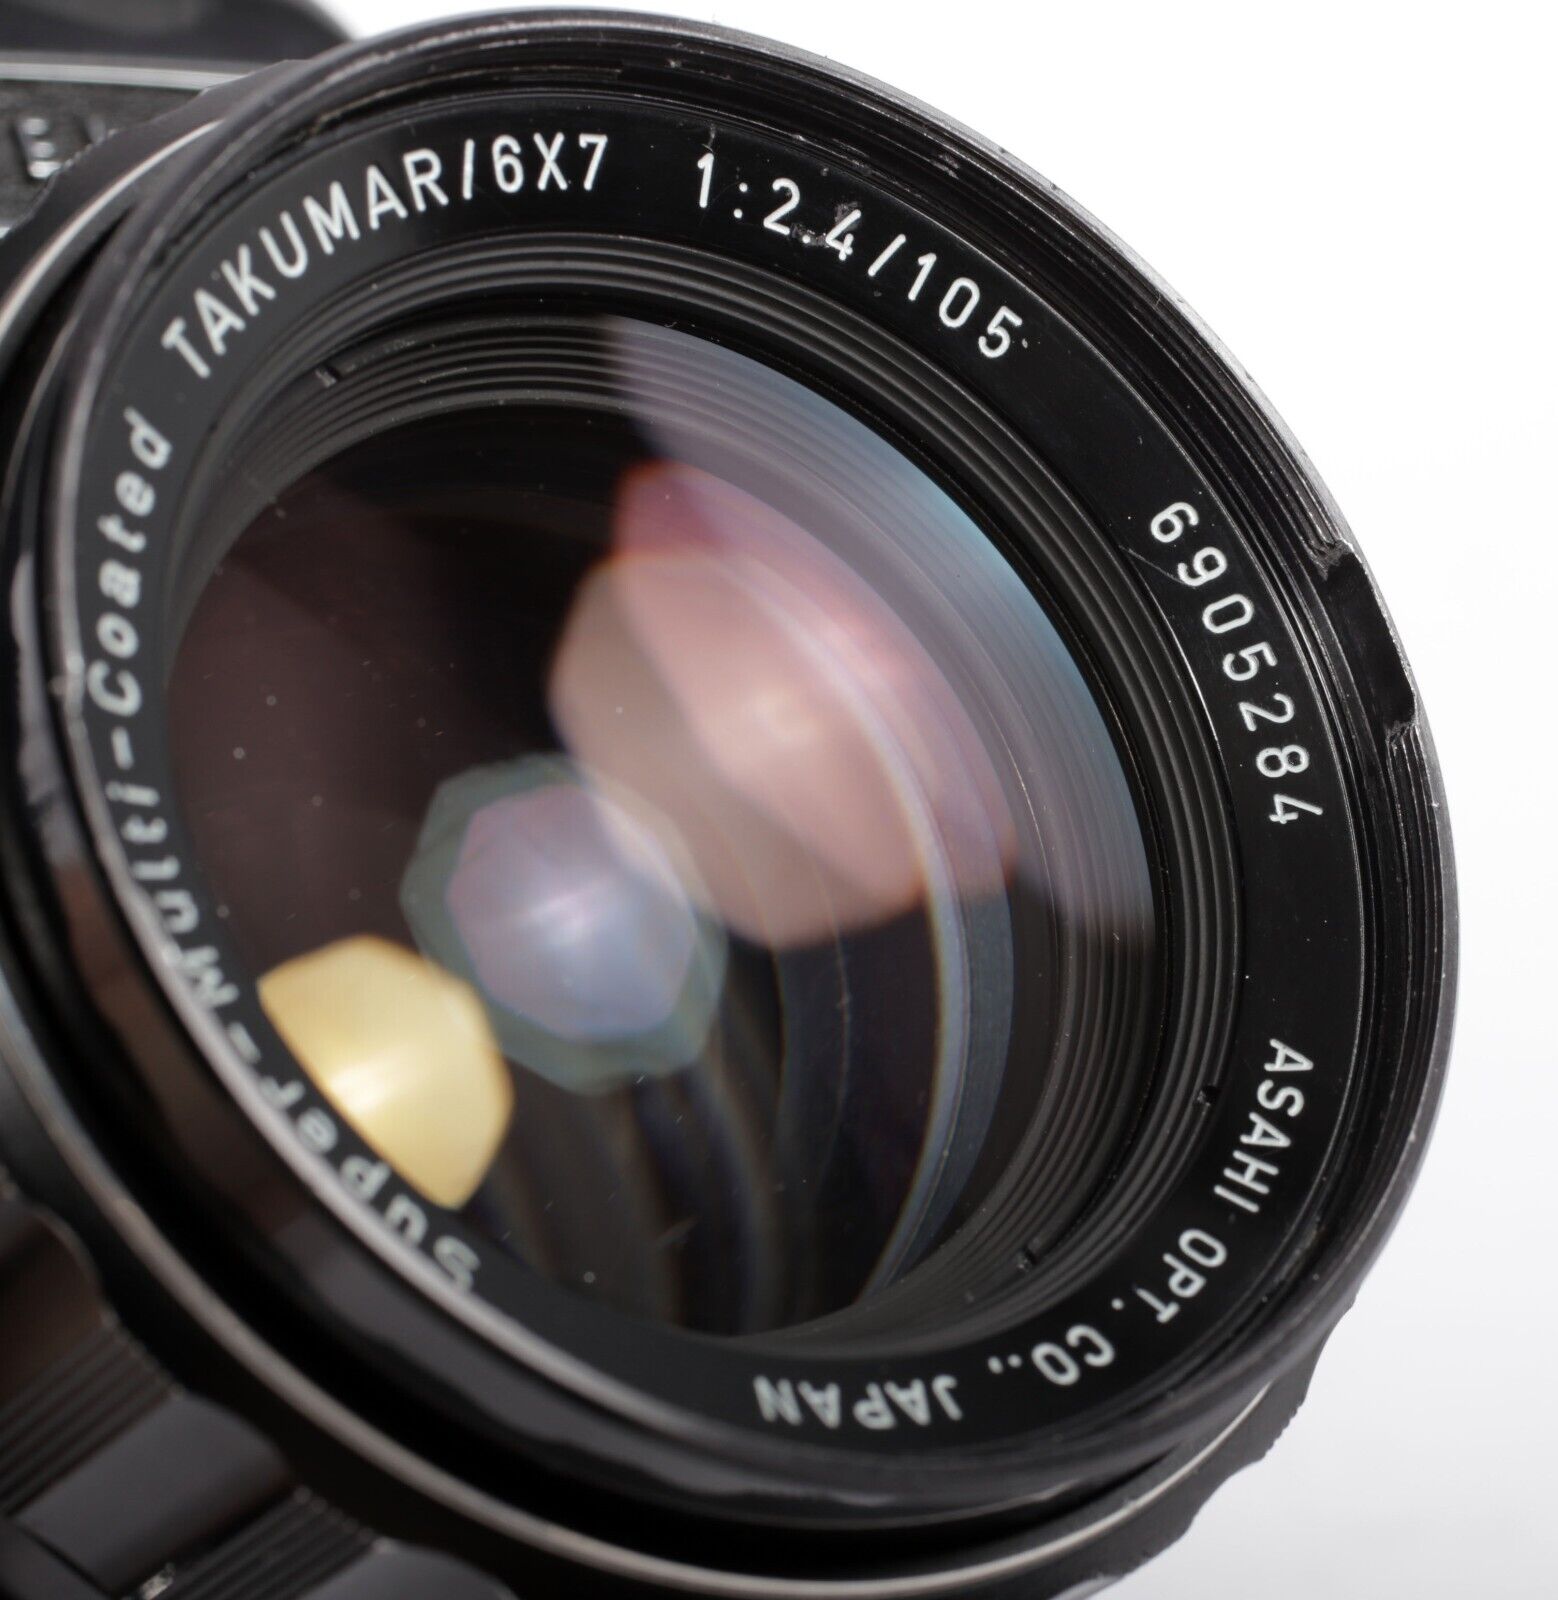 Pentax 6X7 camera with SMC 105mm F2.4 lens #8900